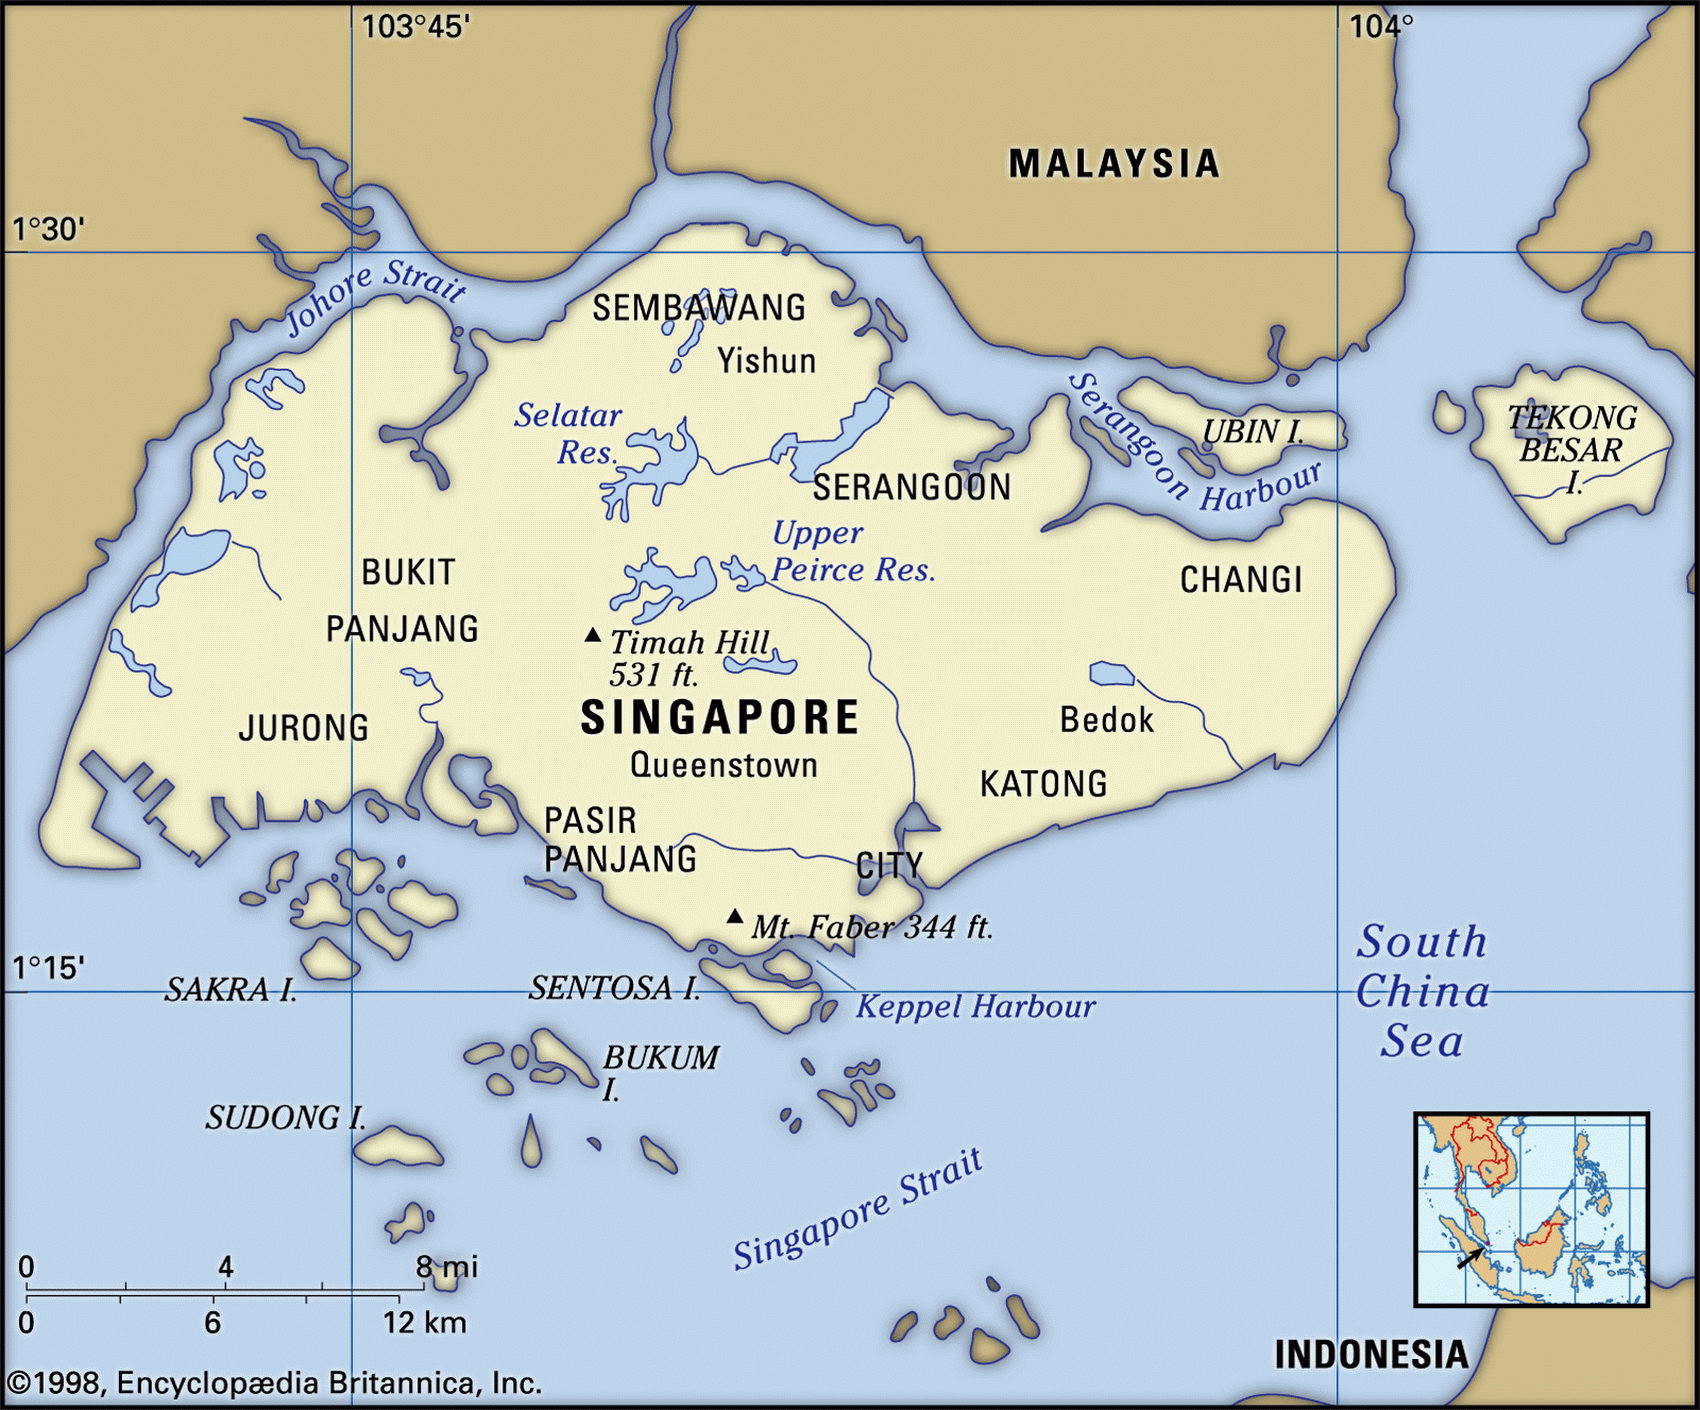 https://map-rus.com/atlas/images/Singapore.jpg